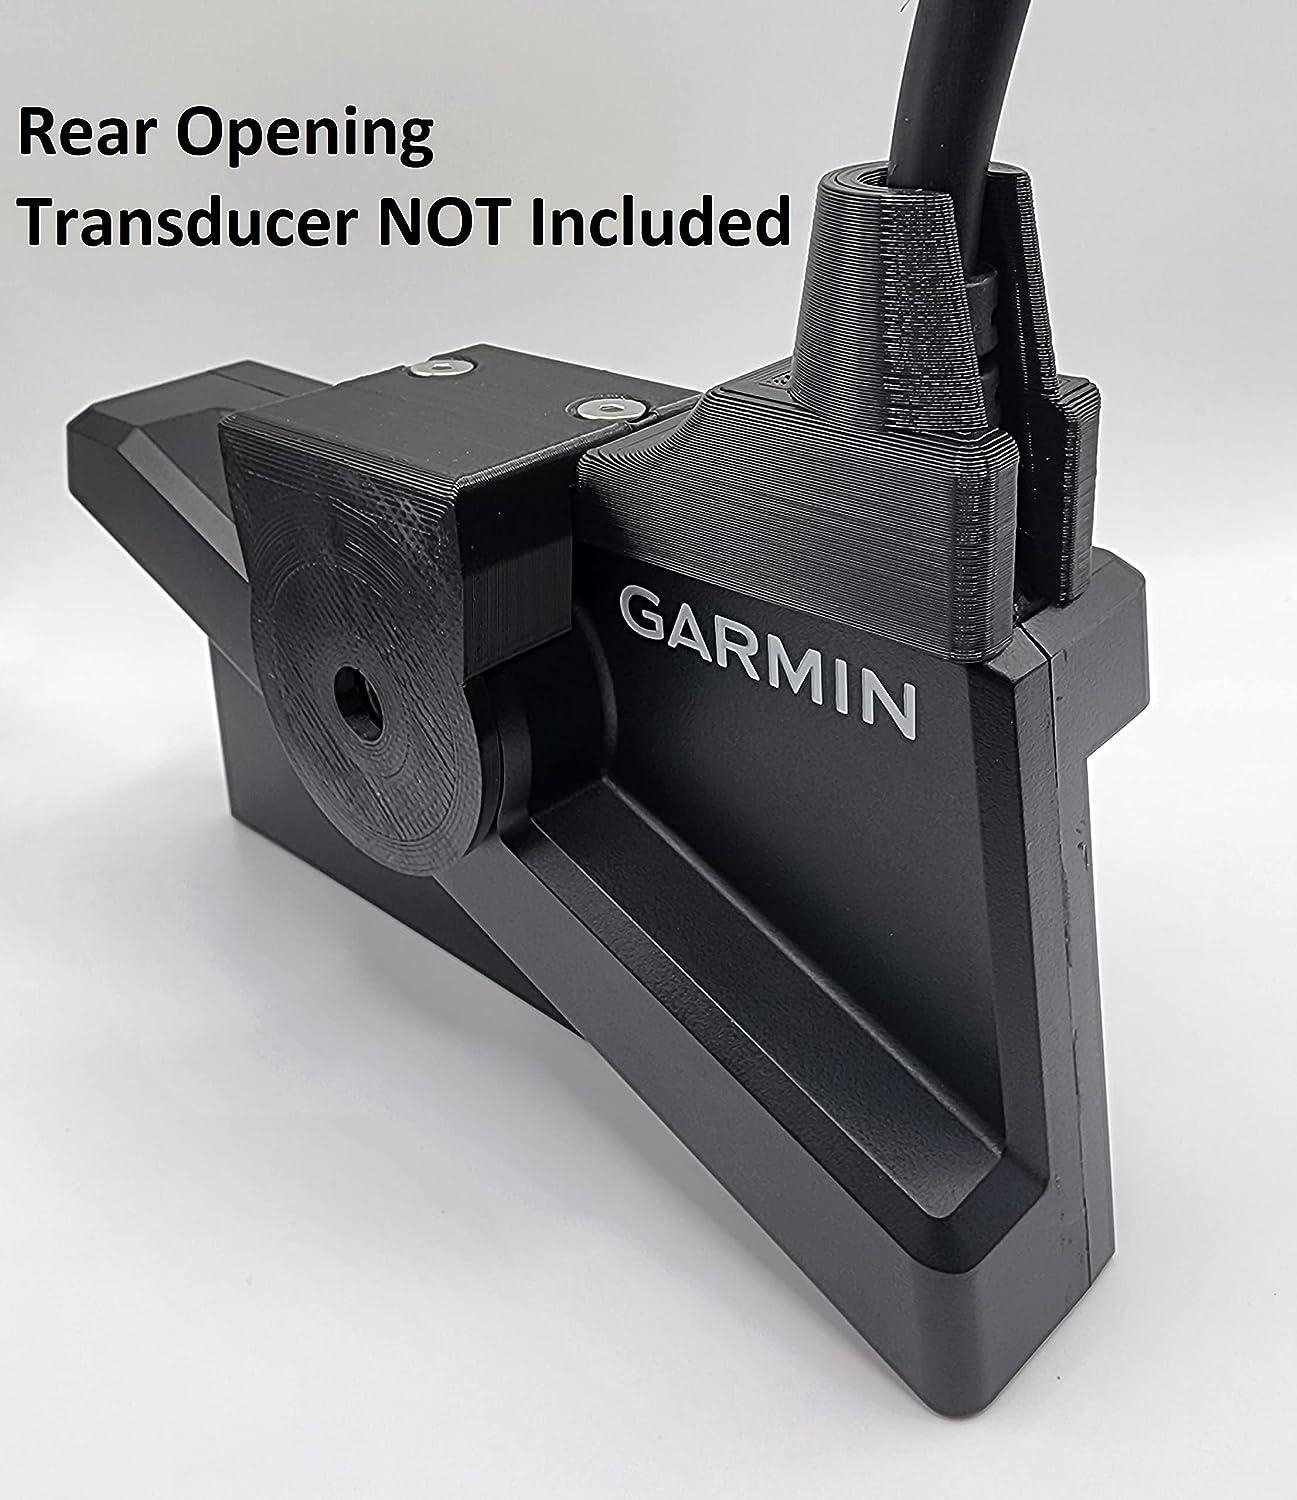 Cable Saver for Garmin Livescope Plus Transducer LVS34 - Patent